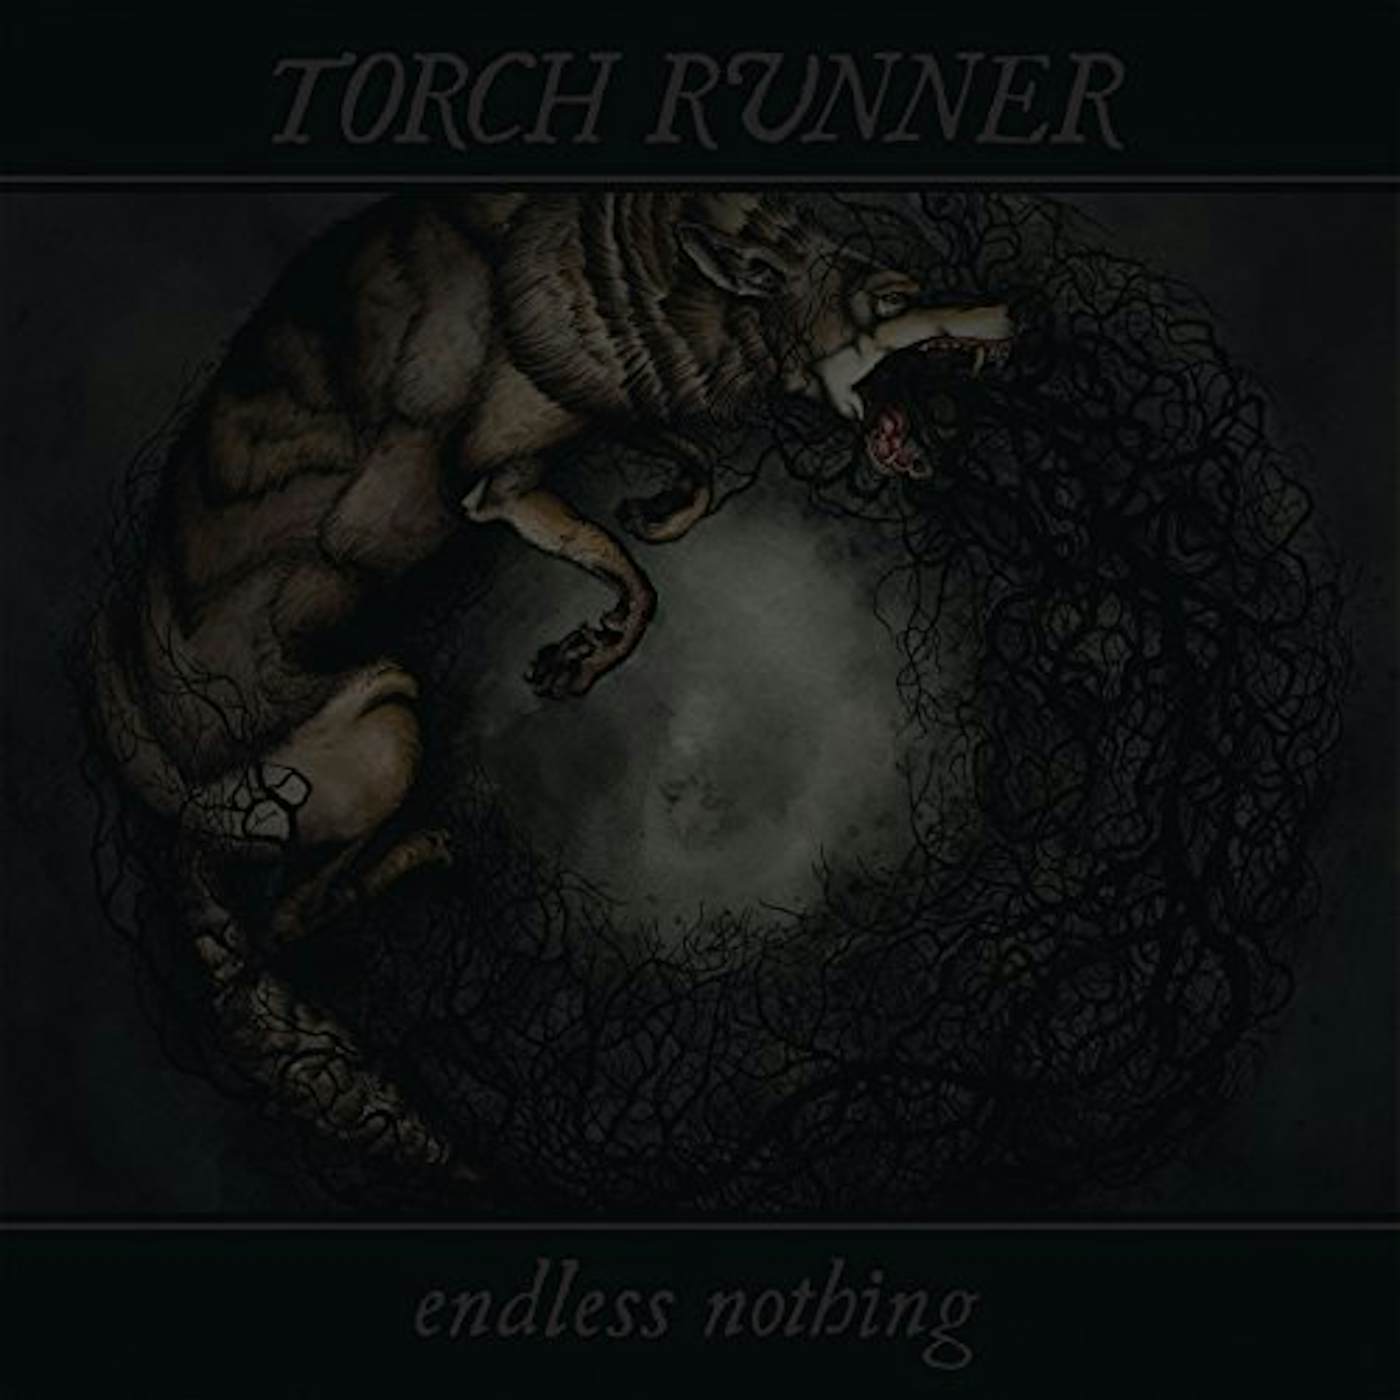 Torch Runner Endless Nothing Vinyl Record